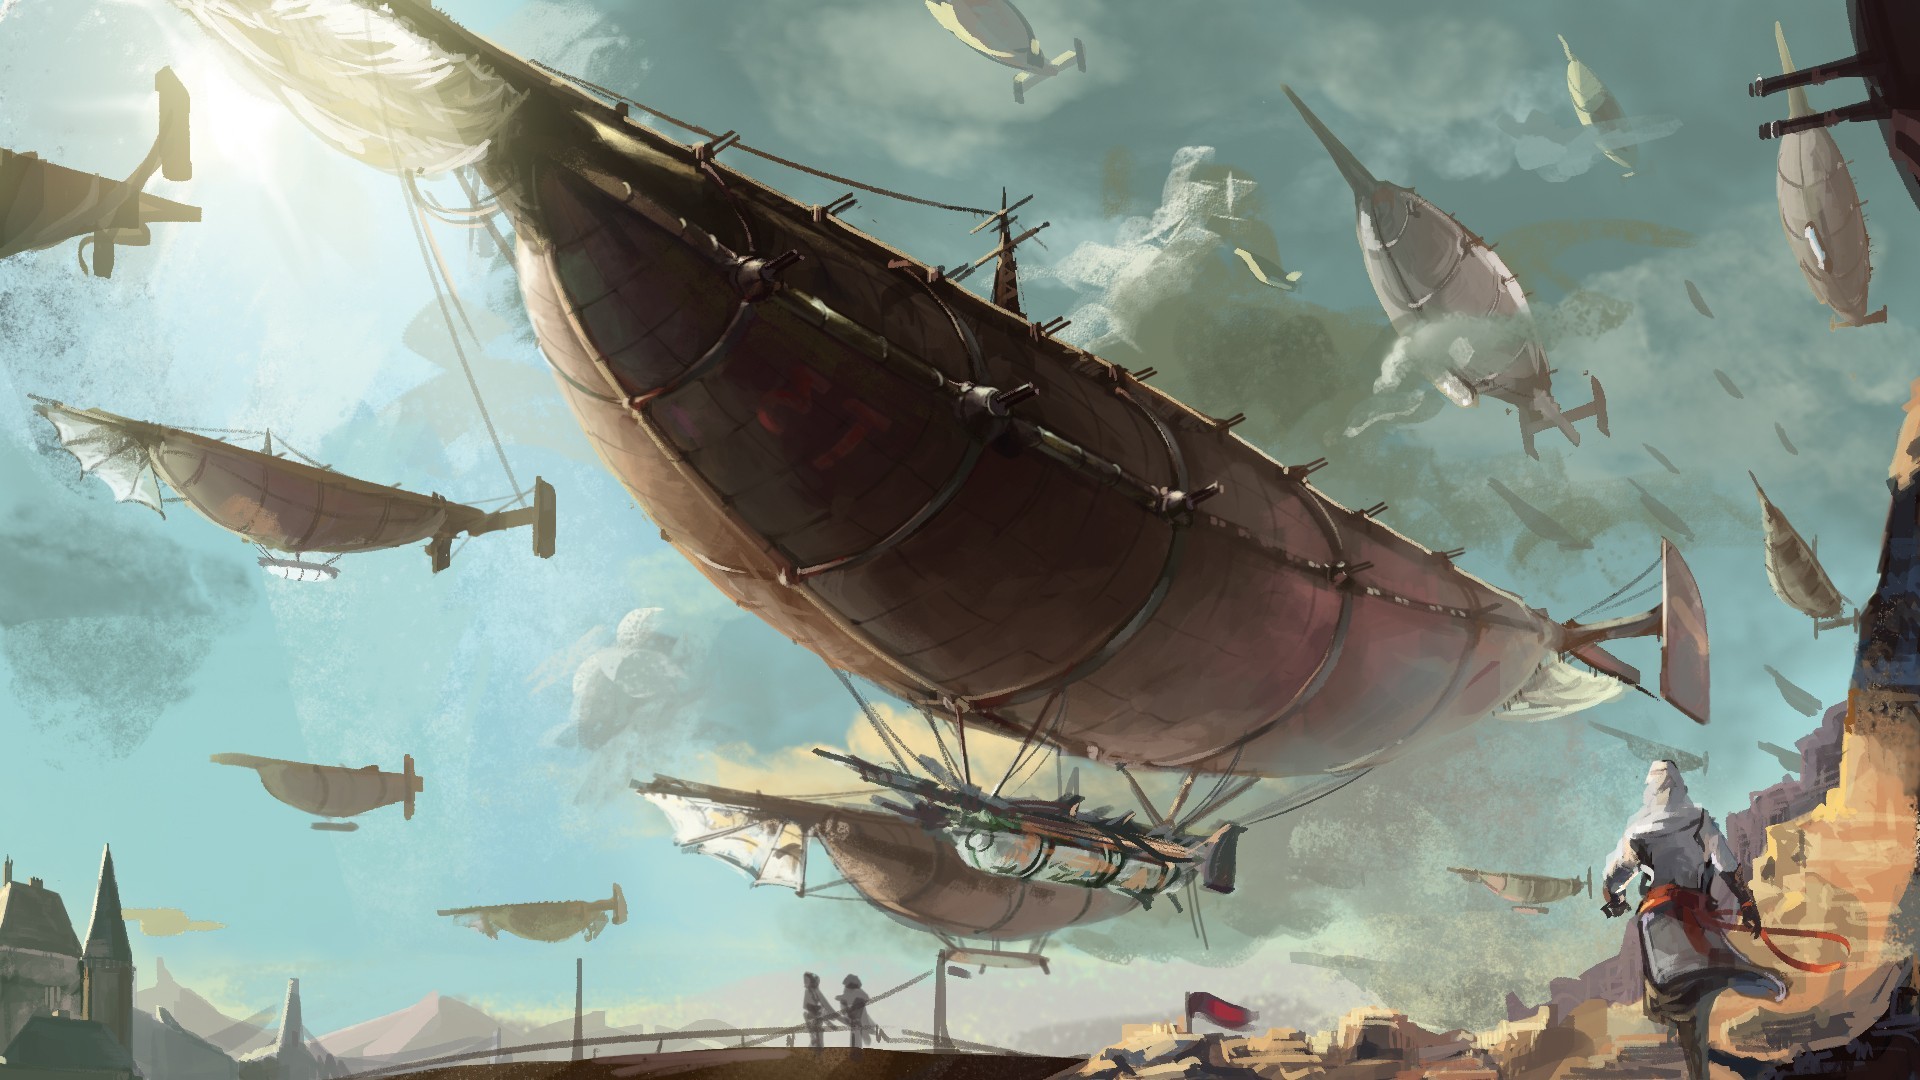 General 1920x1080 fantasy art digital art airships vehicle